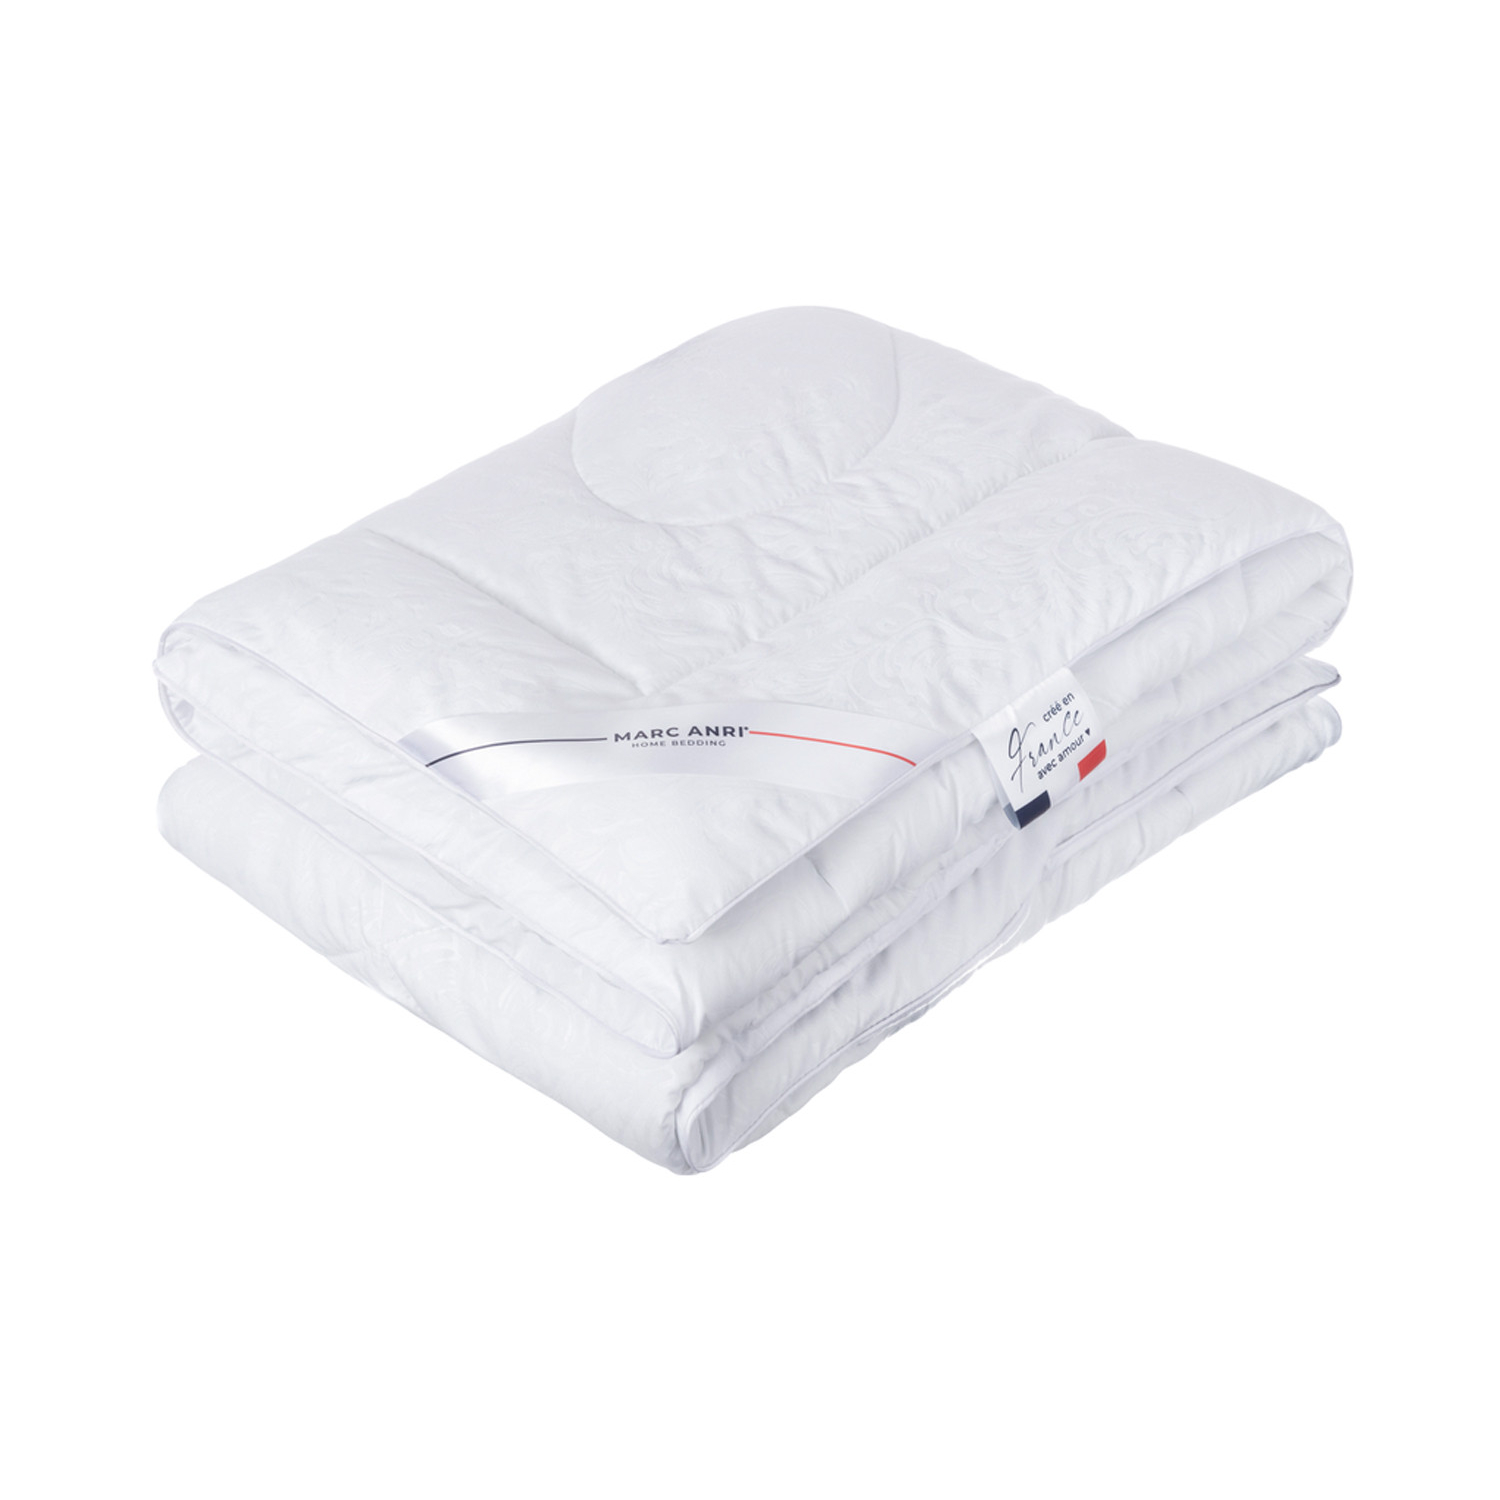 Одеяло Marc Anri Chinon белое 140х200 см (MA-MF) одеяло marc anri rouffach белое 200х220 см ma ec